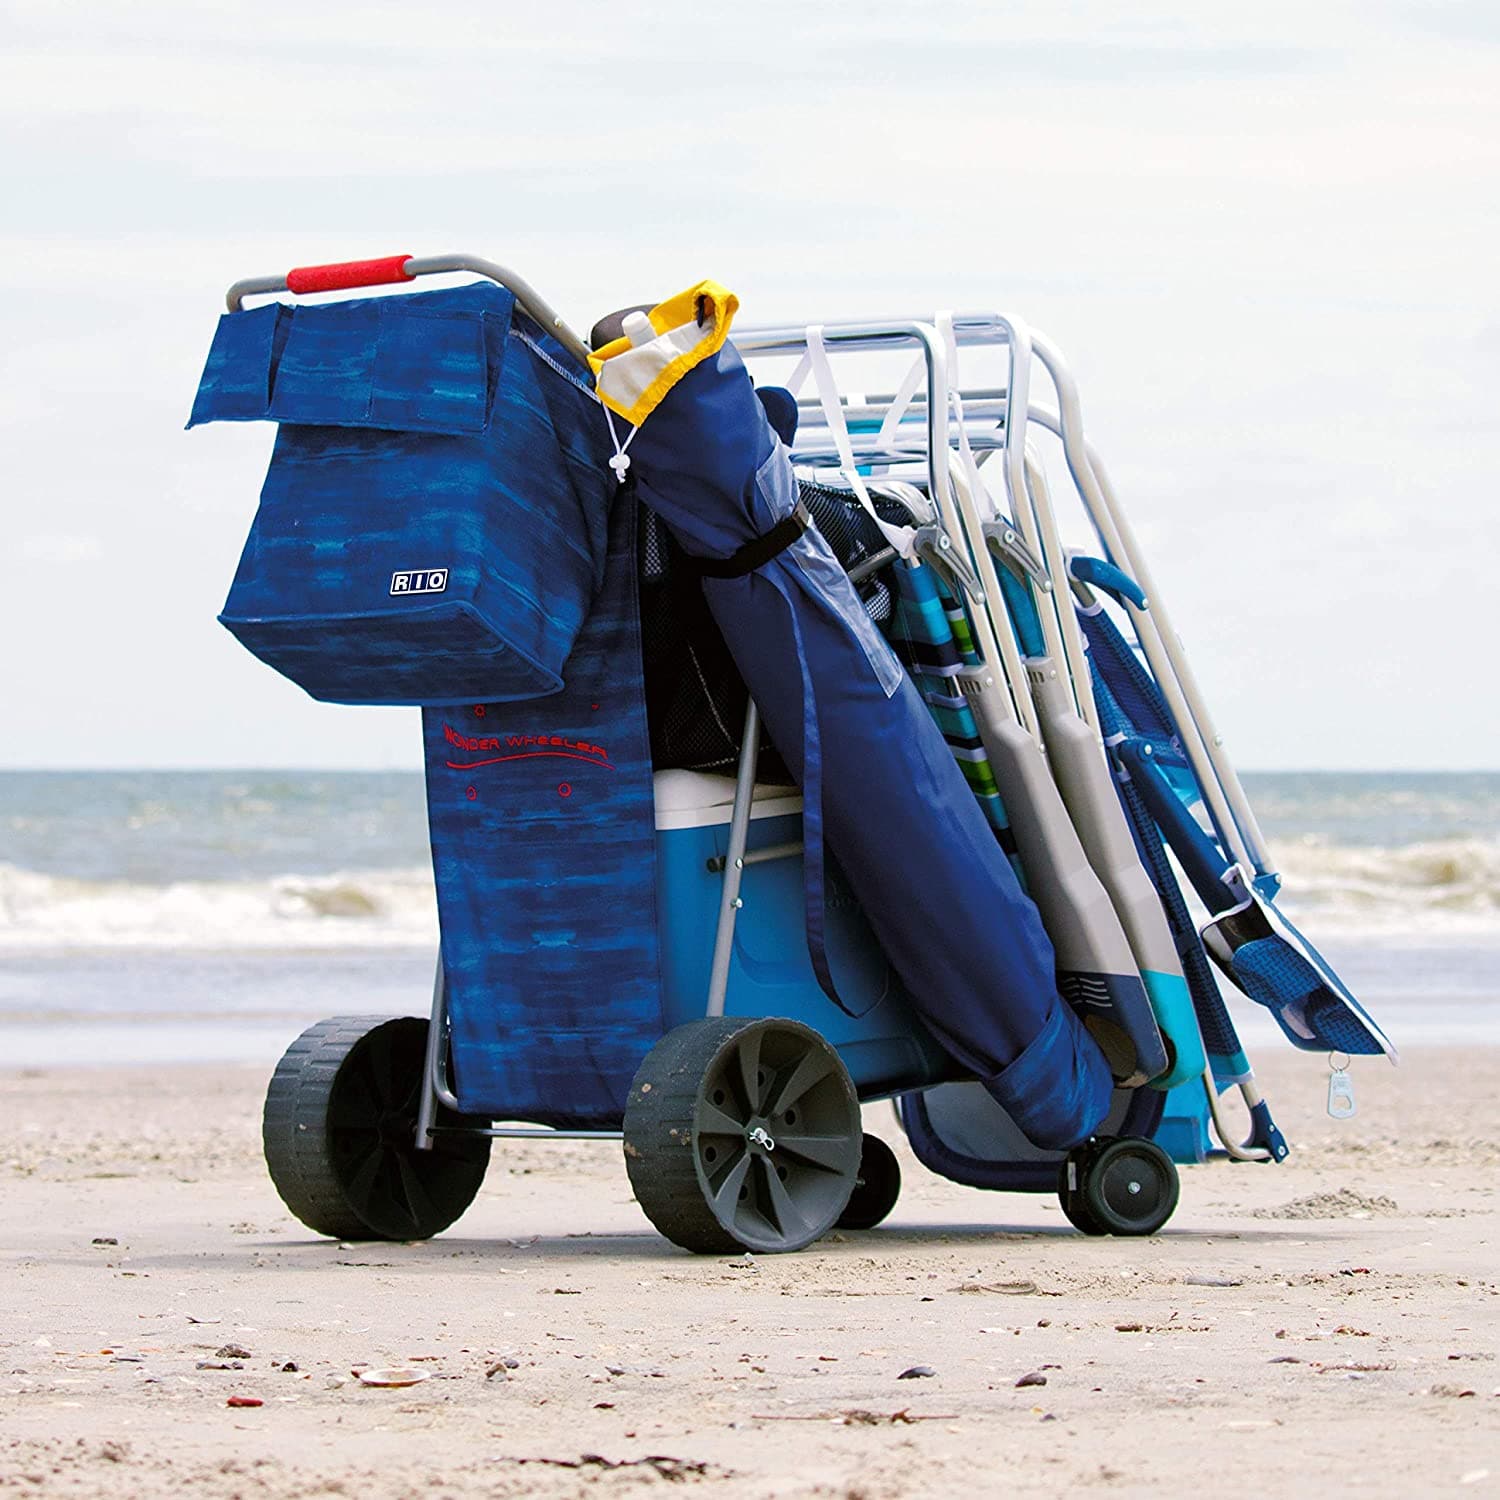 Rio Brands Beach Wonder Wheeler Deluxe Beach Utility Foldable Cart - Senior.com Beach Cart